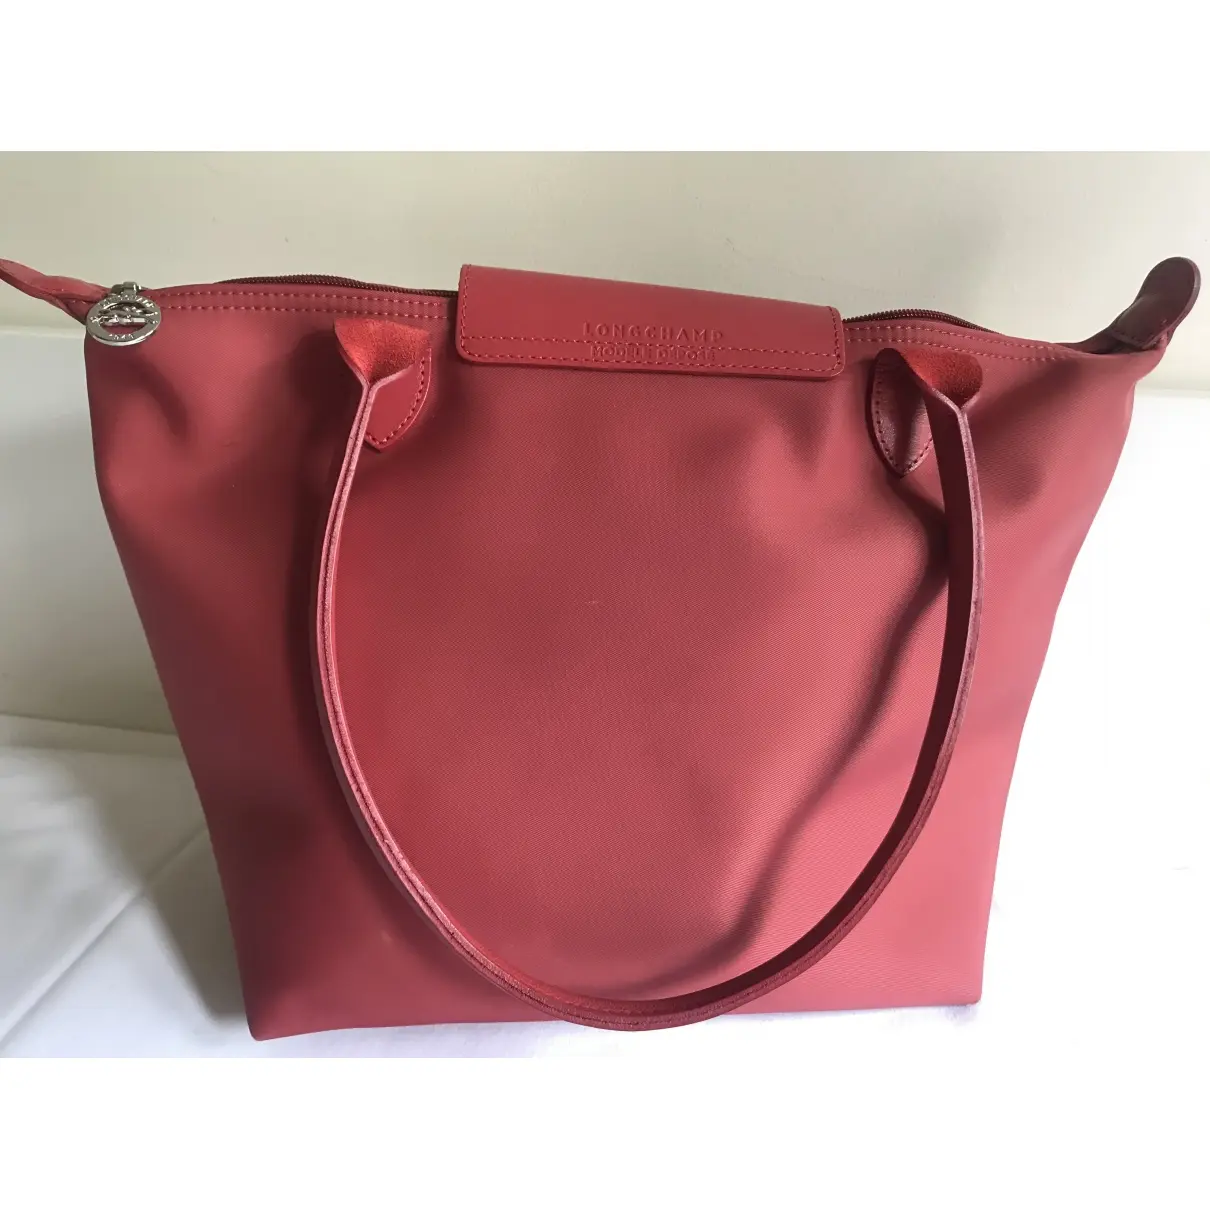 Buy Longchamp Penelope handbag online